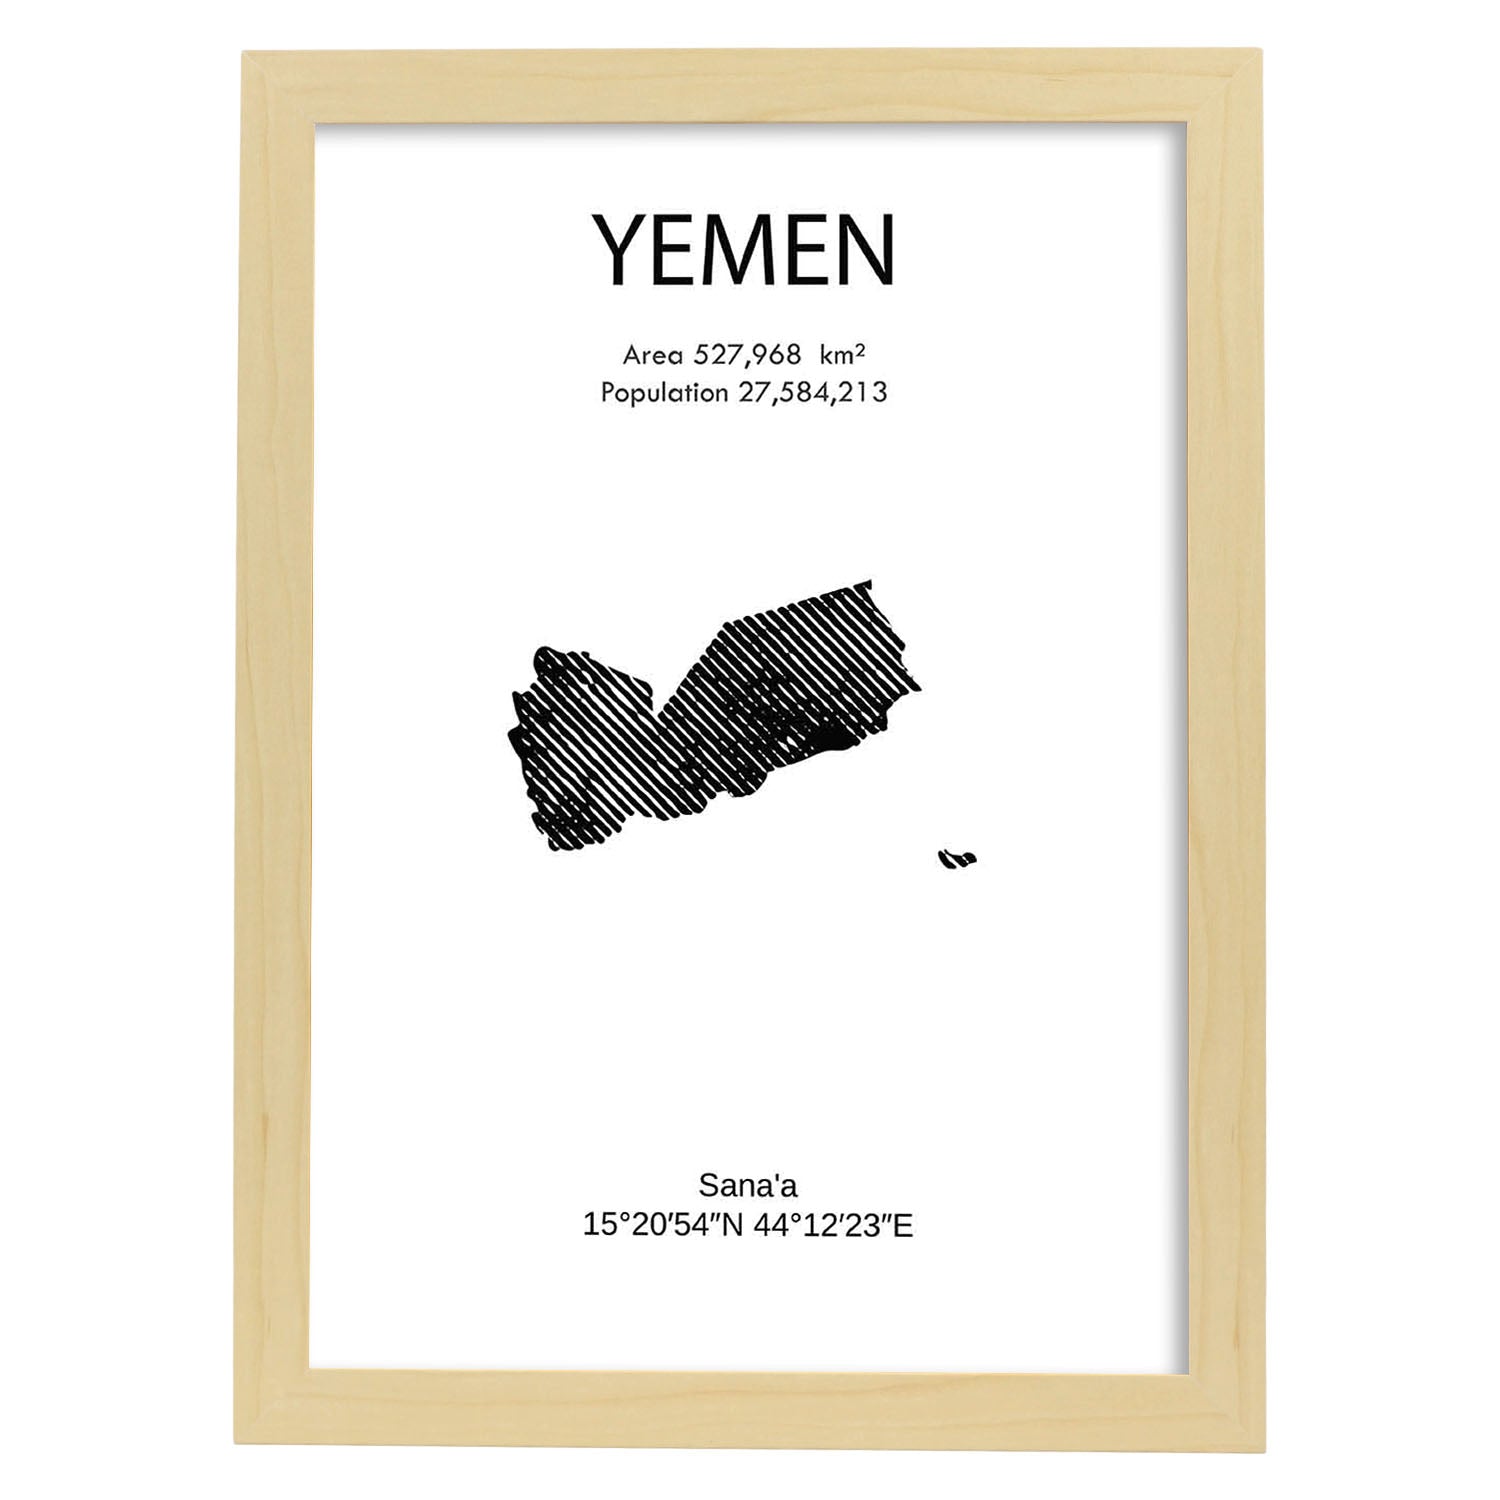 Poster de Yemen. Láminas de paises y continentes del mundo.-Artwork-Nacnic-A4-Marco Madera clara-Nacnic Estudio SL